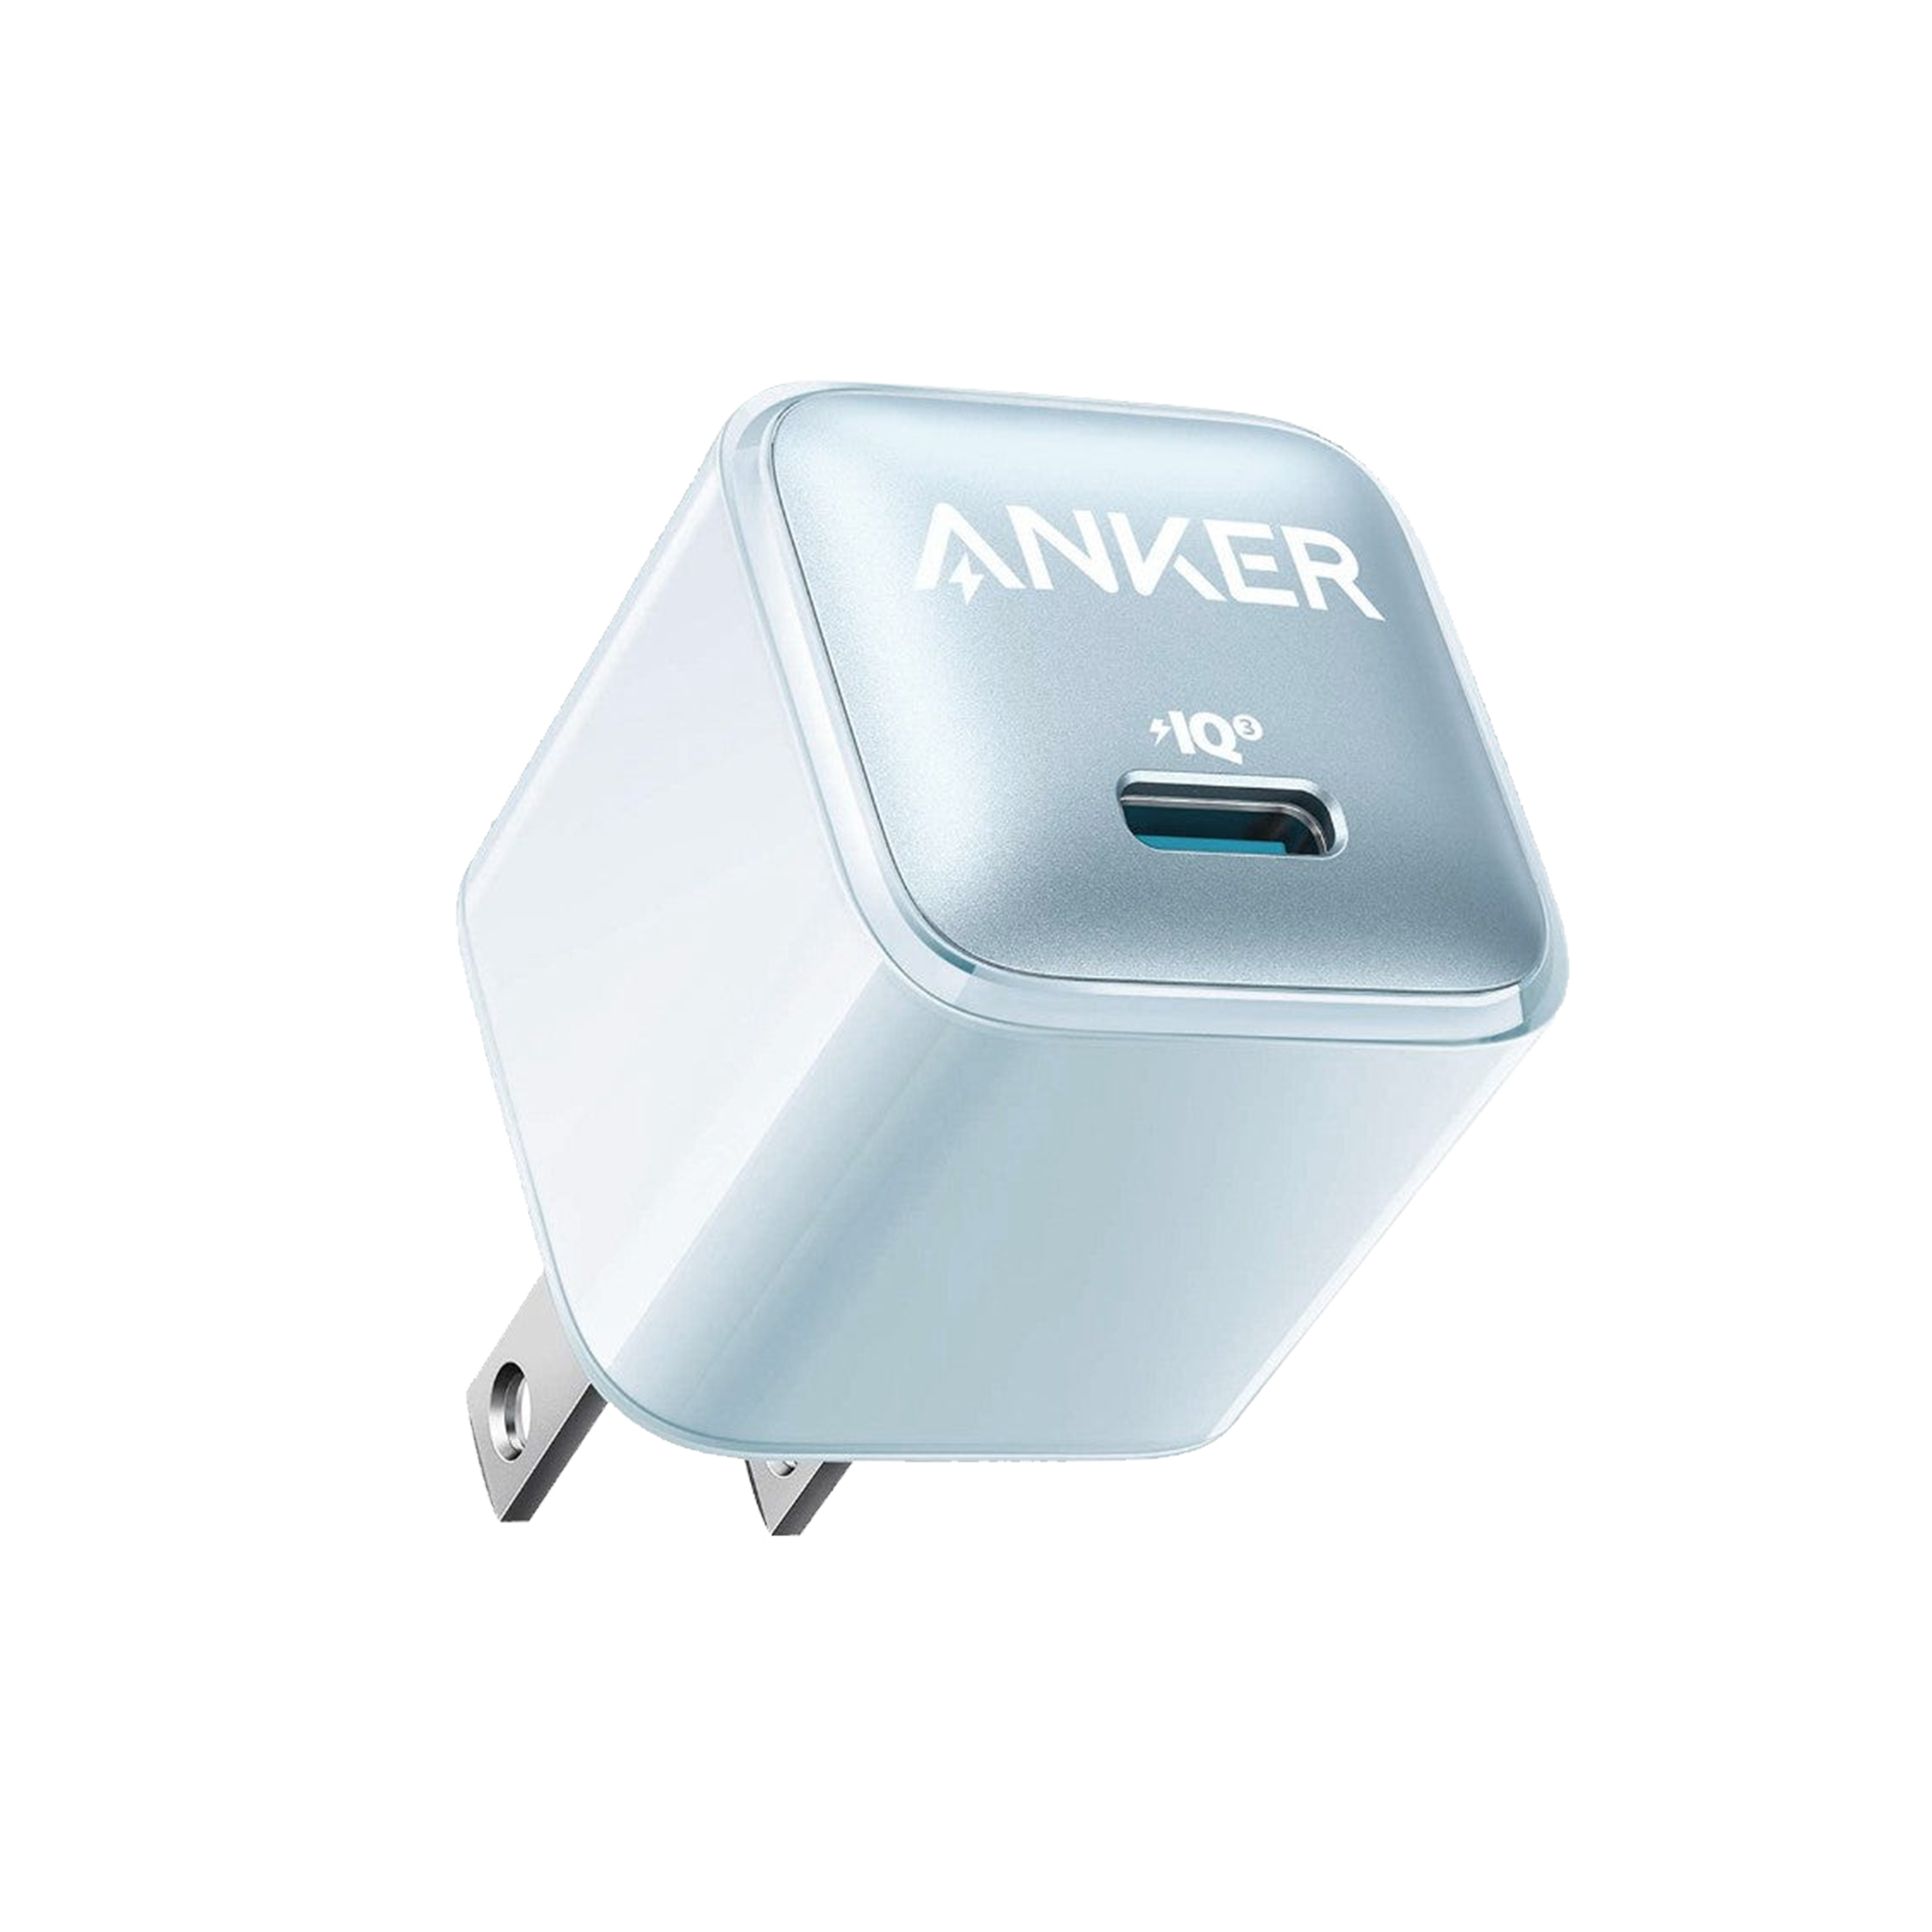 Anker 511 Charger (Nano Pro) - Anker US